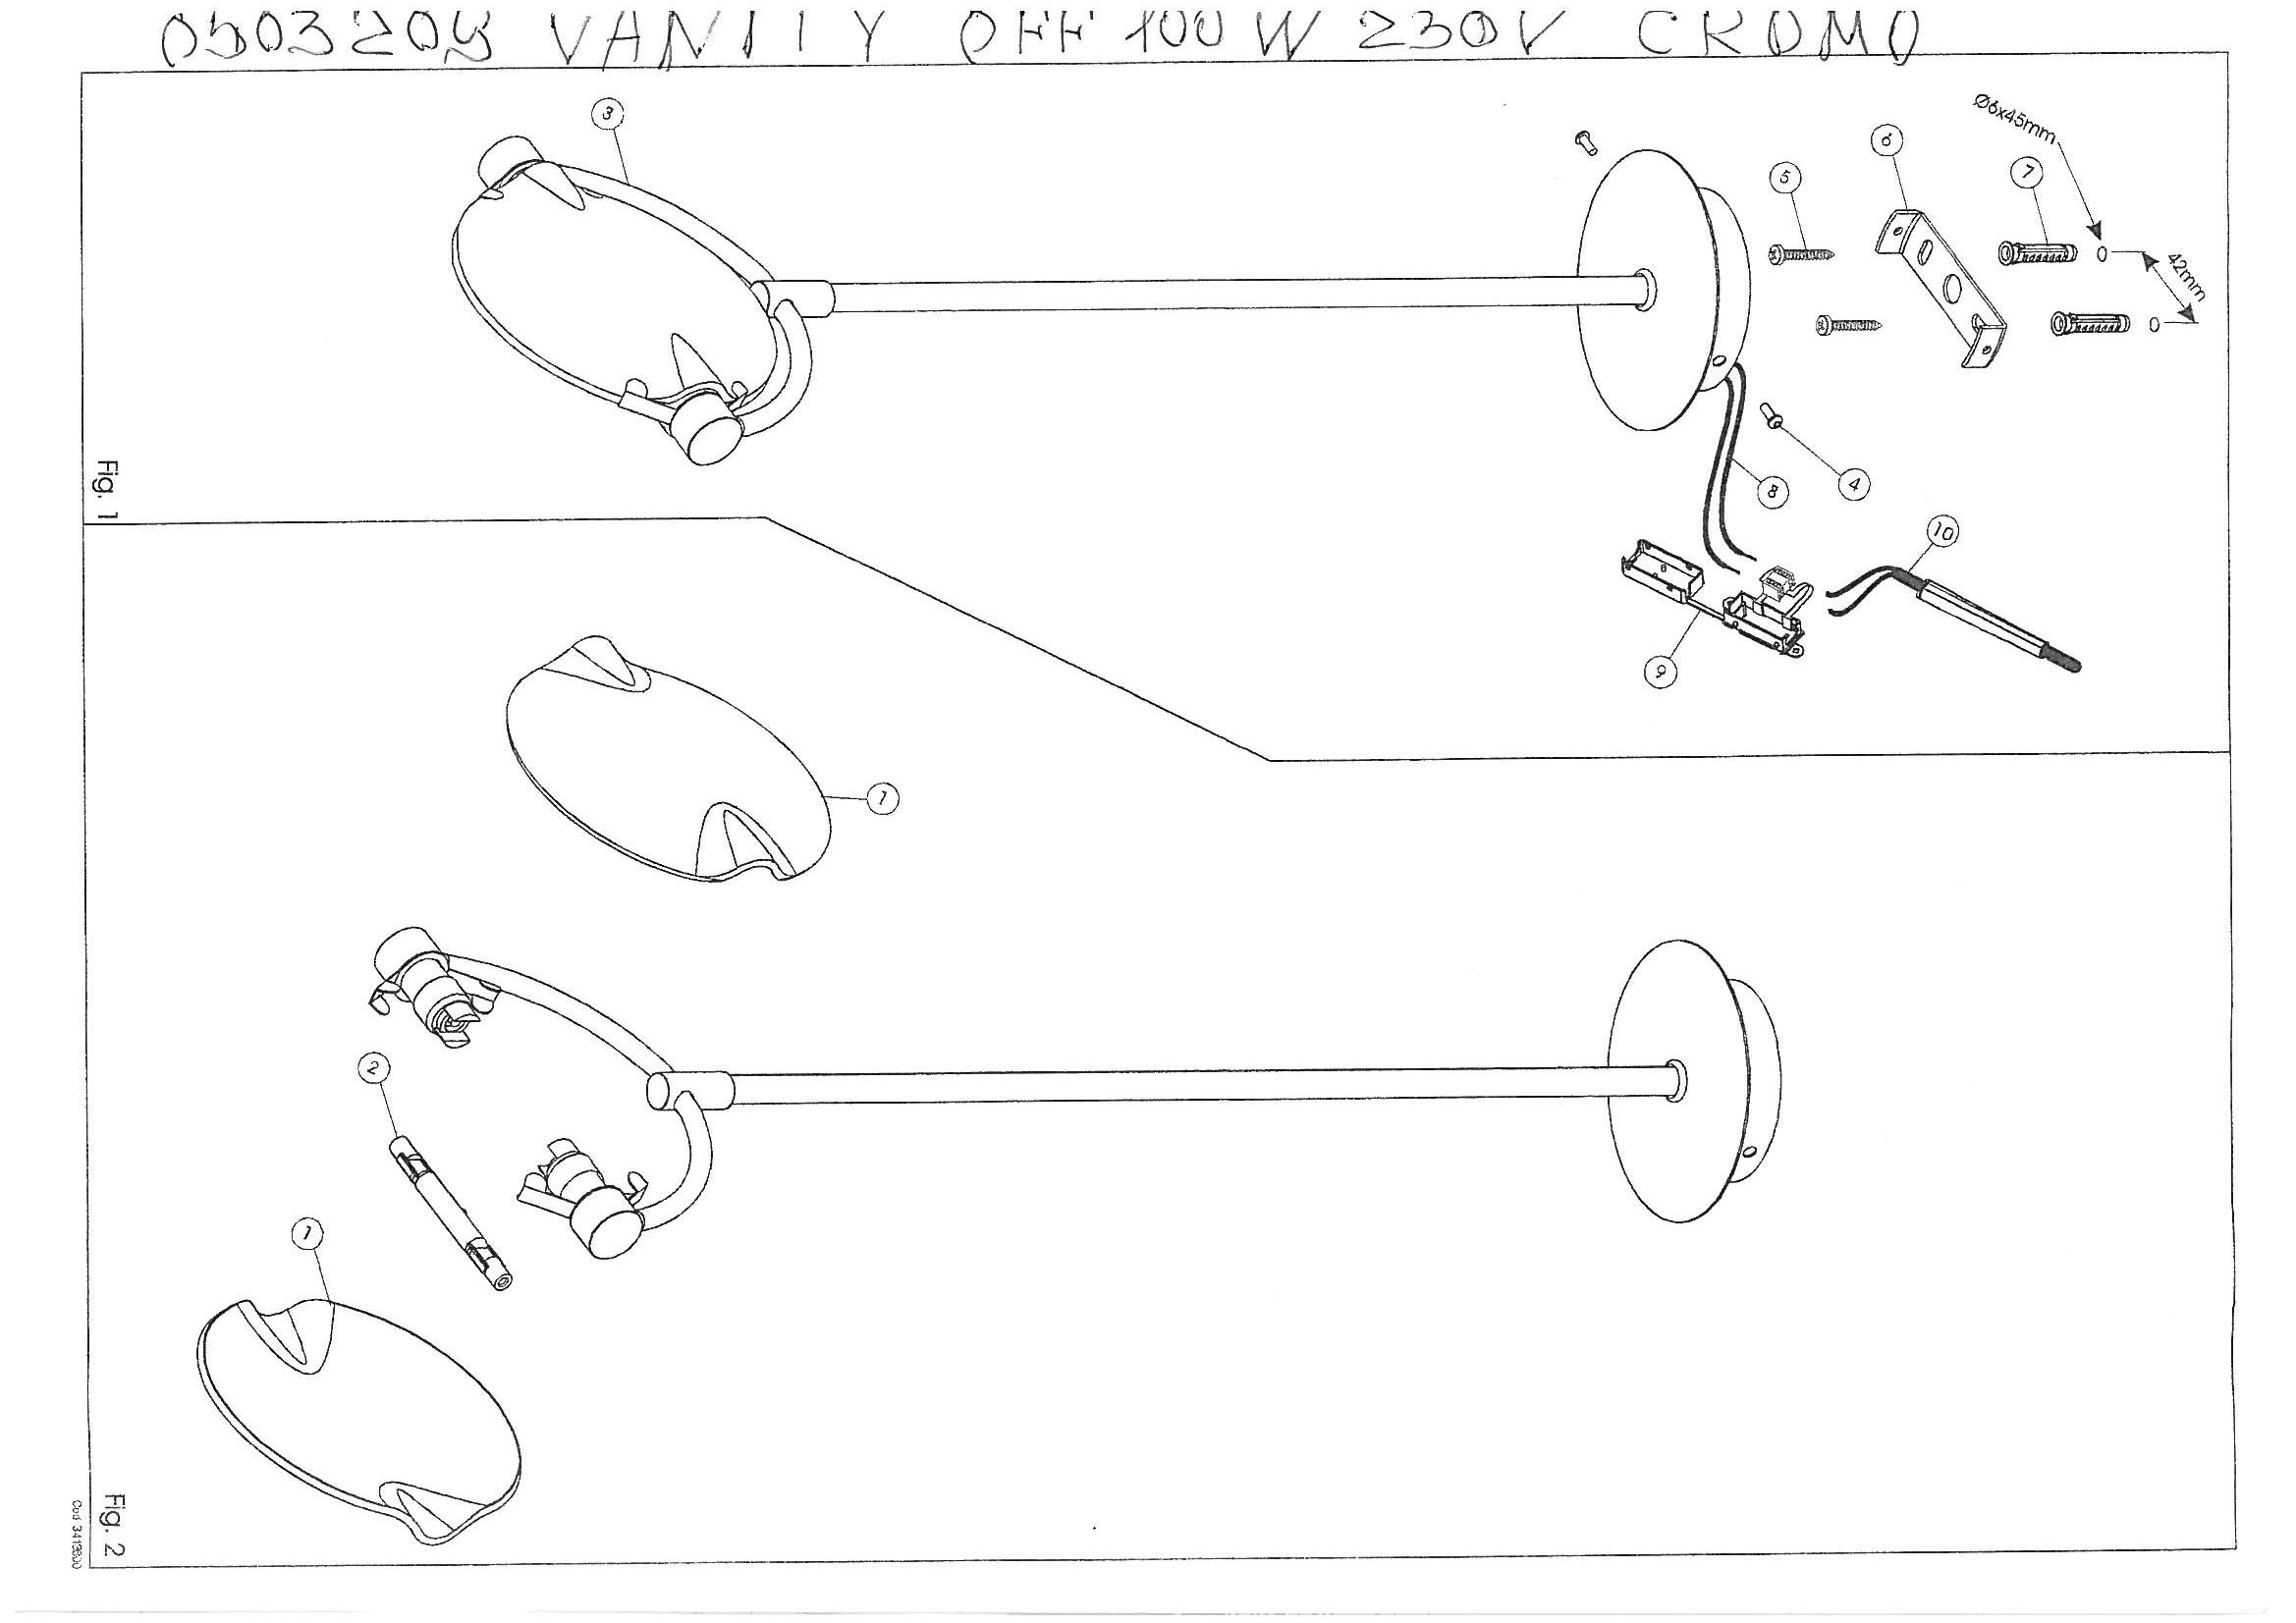 Галогенный светильник Vanity off, 100Вт, 220В кабель 2000мм хром, 160х16х662мм